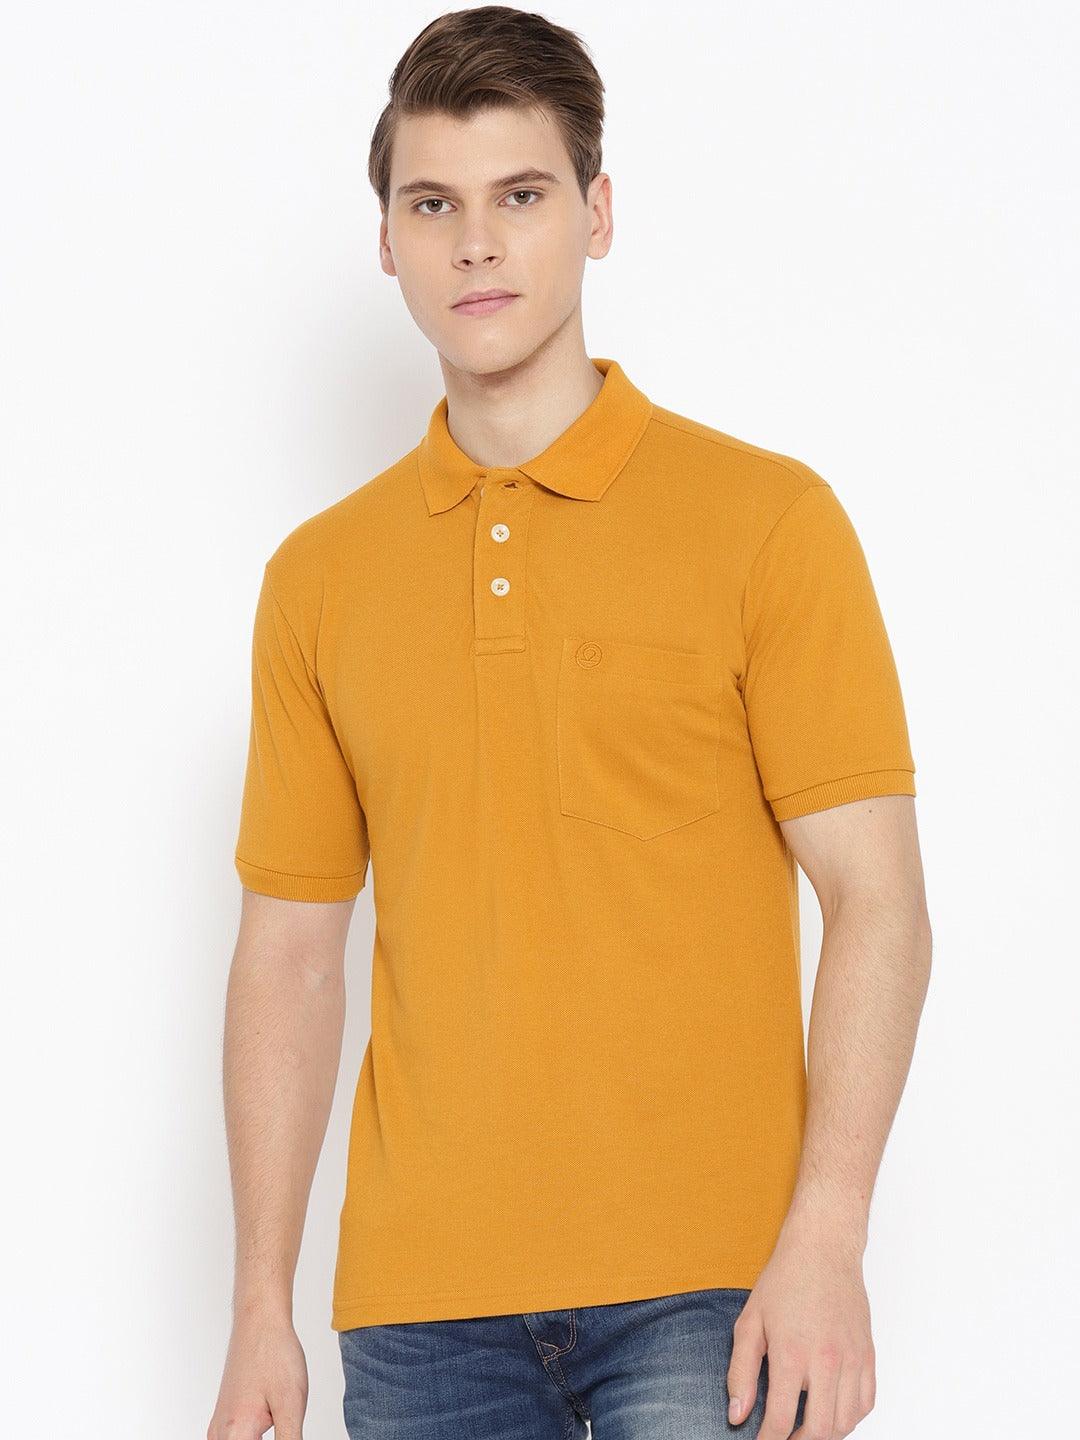 Men's Mustard Half Sleeves Polo T-Shirt